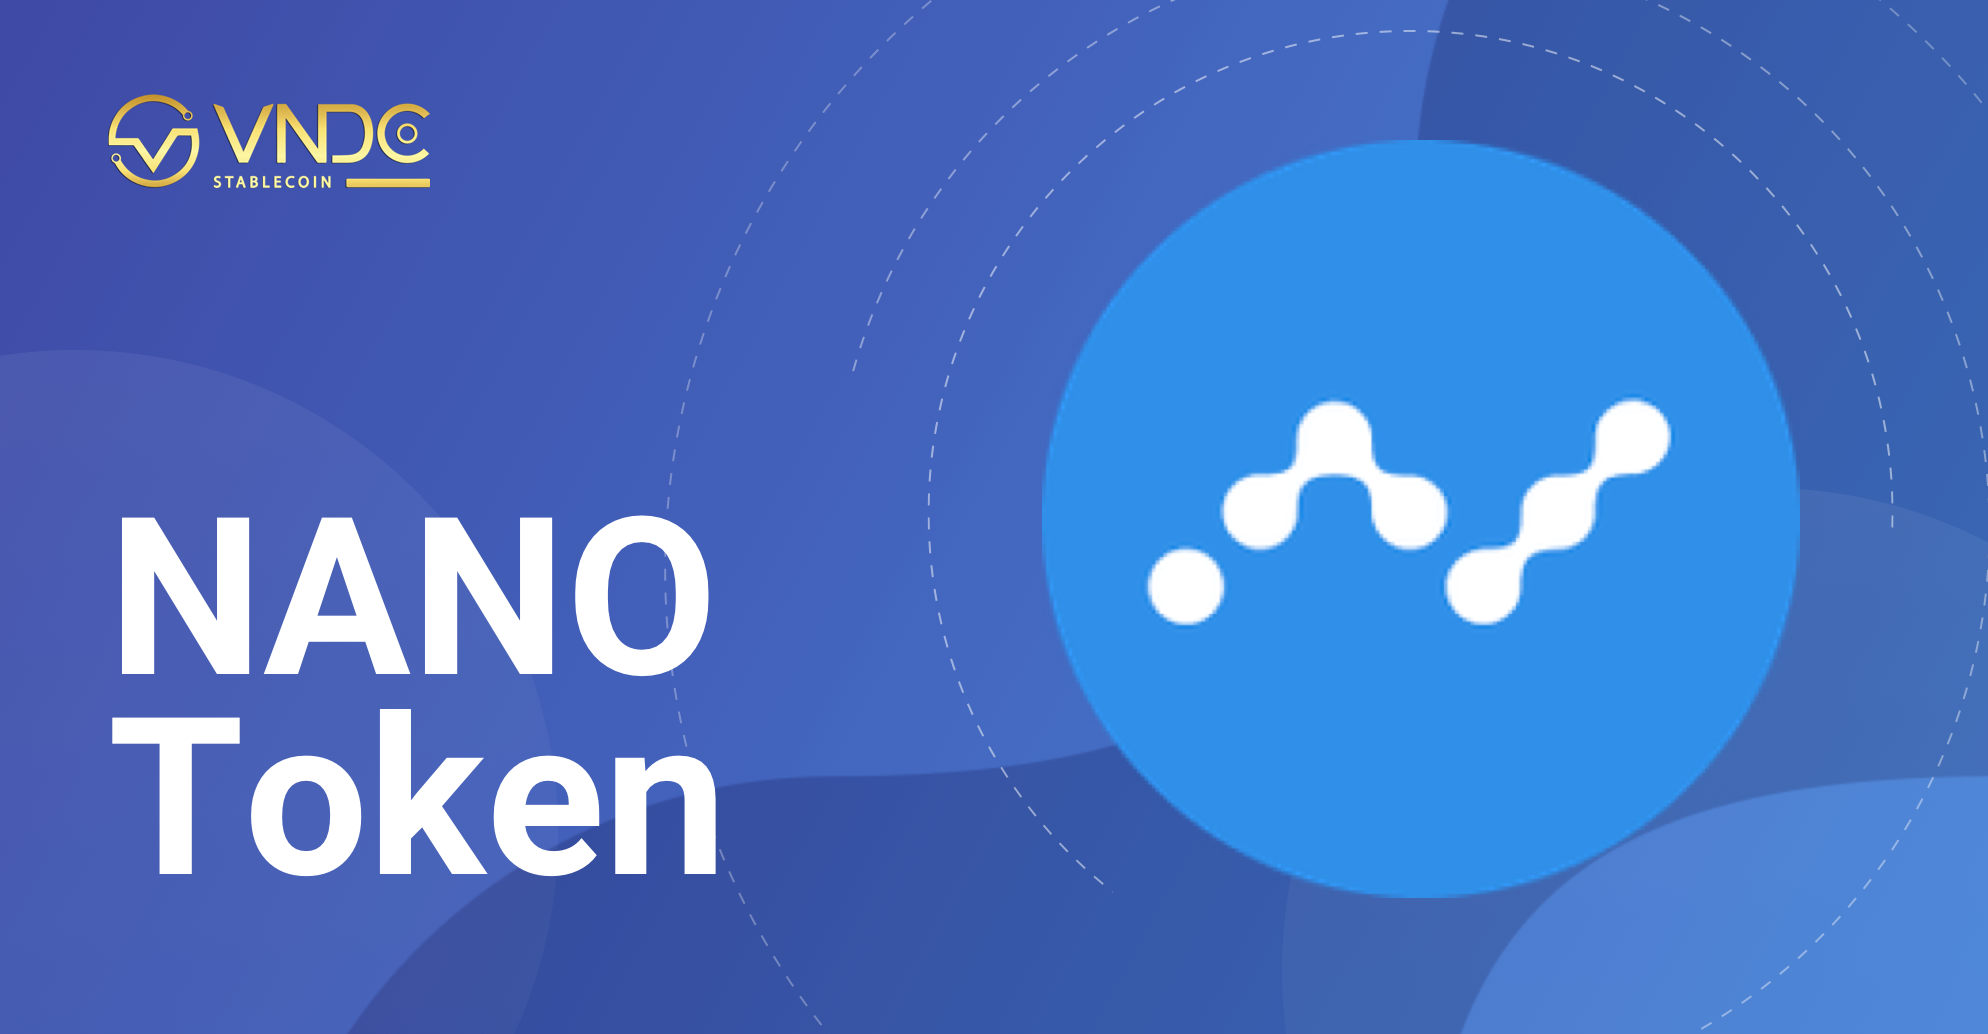 Chính thức niêm yết NANO Token (NANO) trên VNDC Wallet